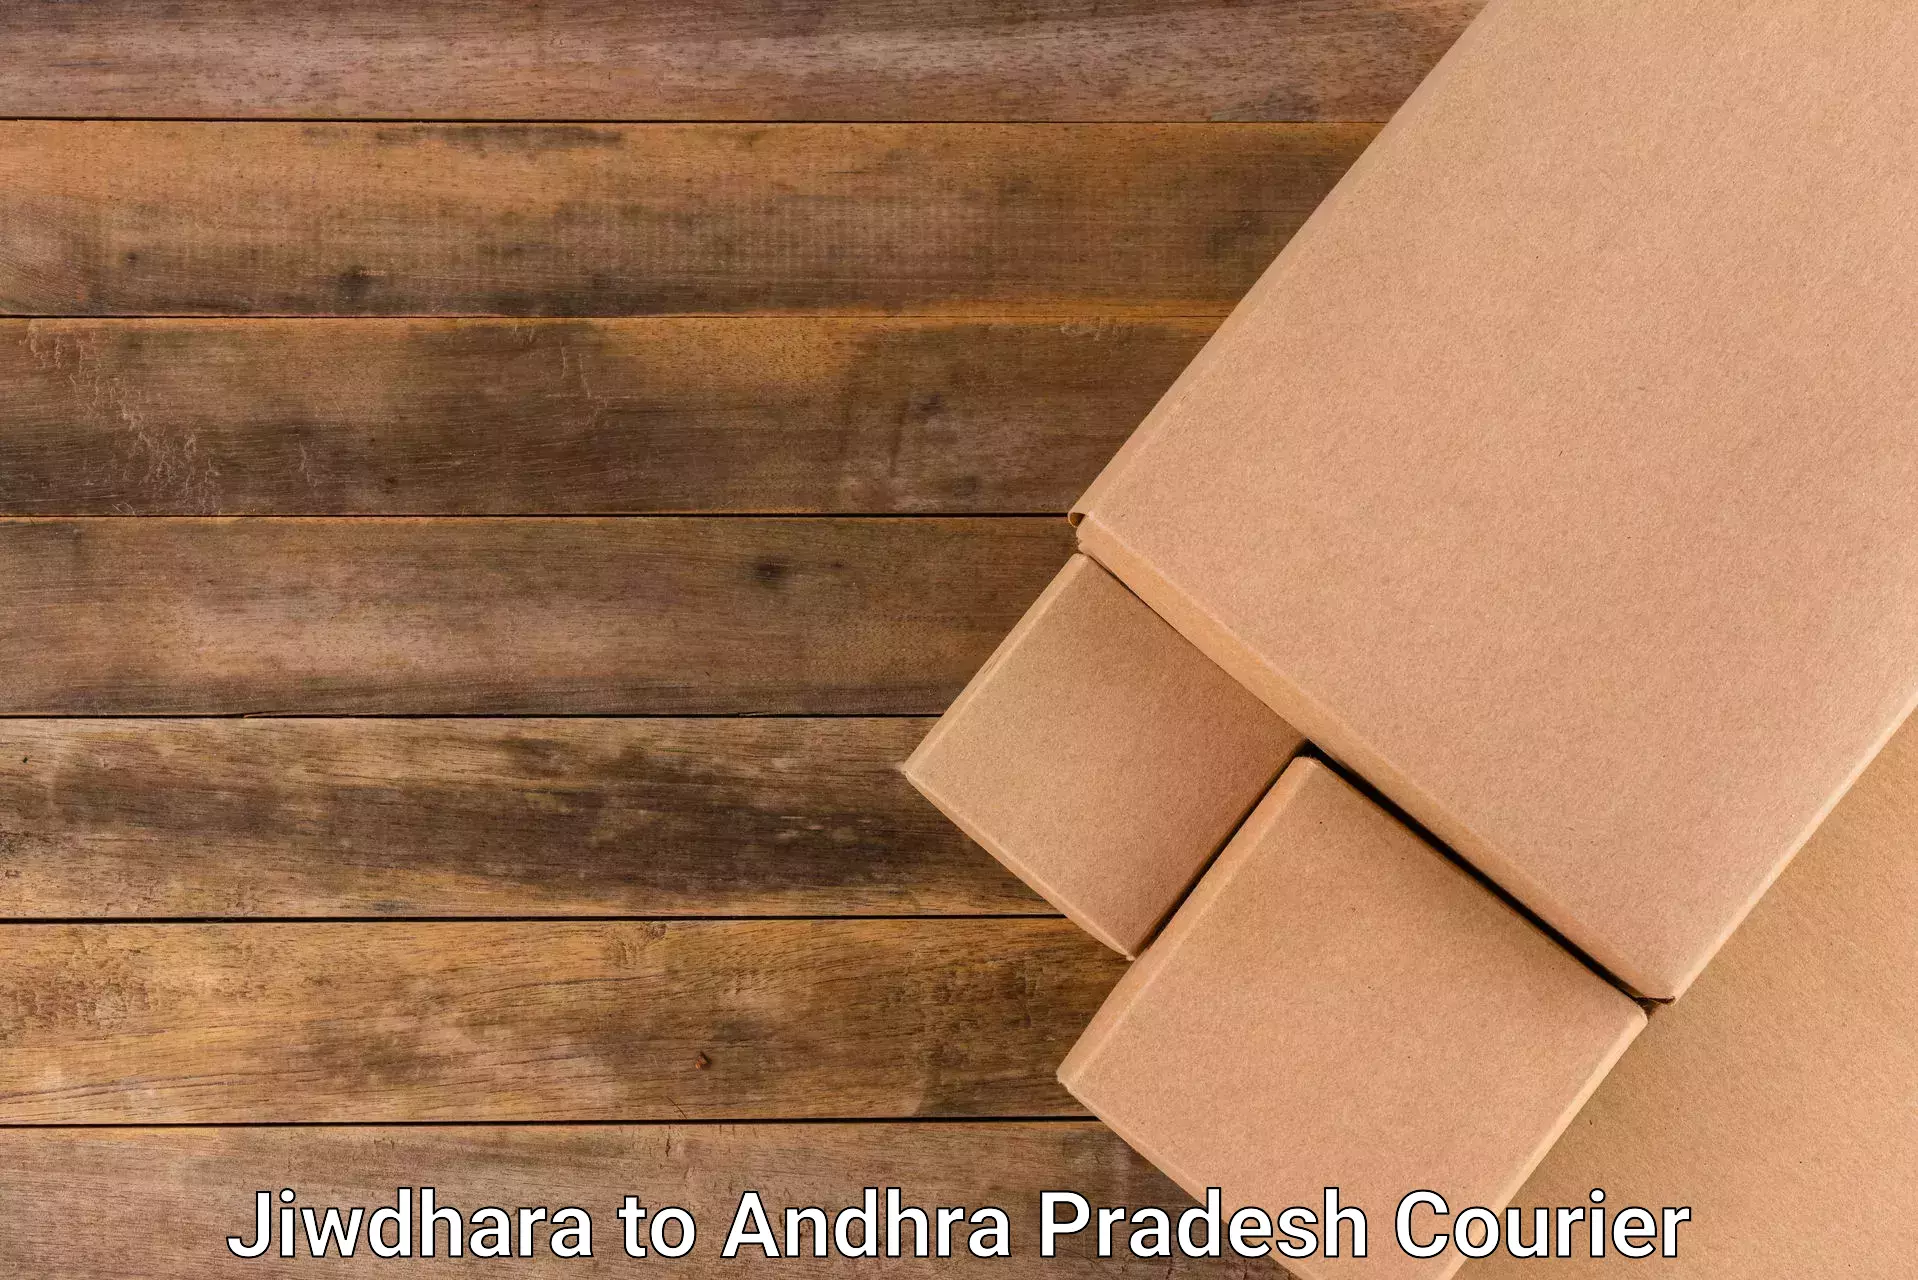 Efficient order fulfillment Jiwdhara to Andhra Pradesh